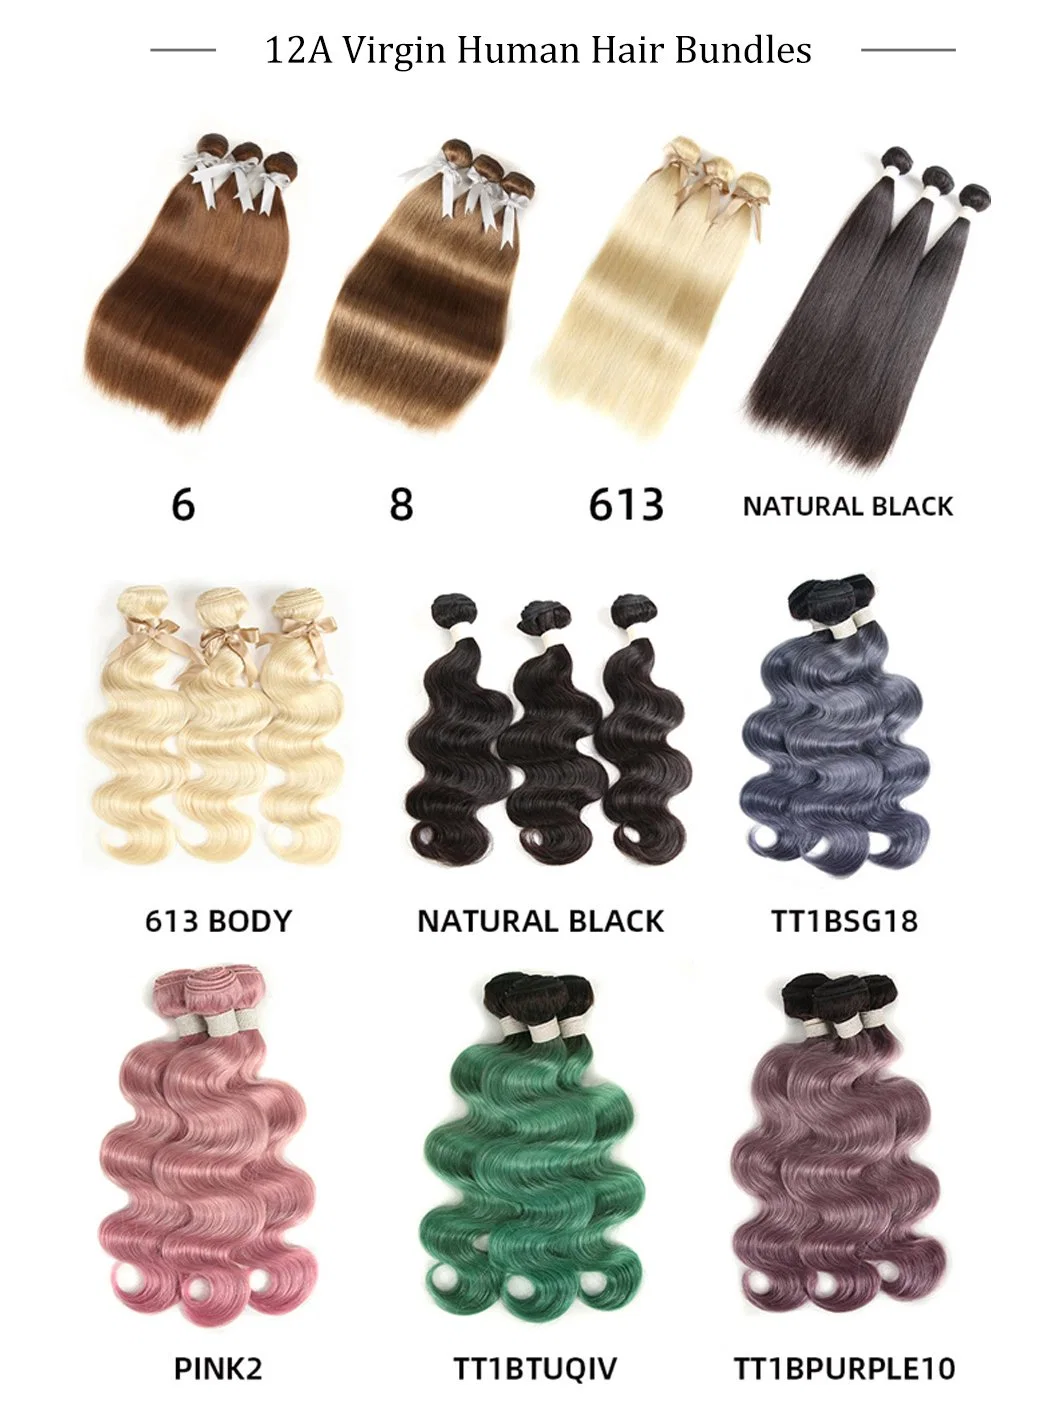 Hair Soft Crochet Braids Dreadlock Extension Remy 8-20 Inch Curly Dreadlock Hand Made Braiding Human Hair Extension